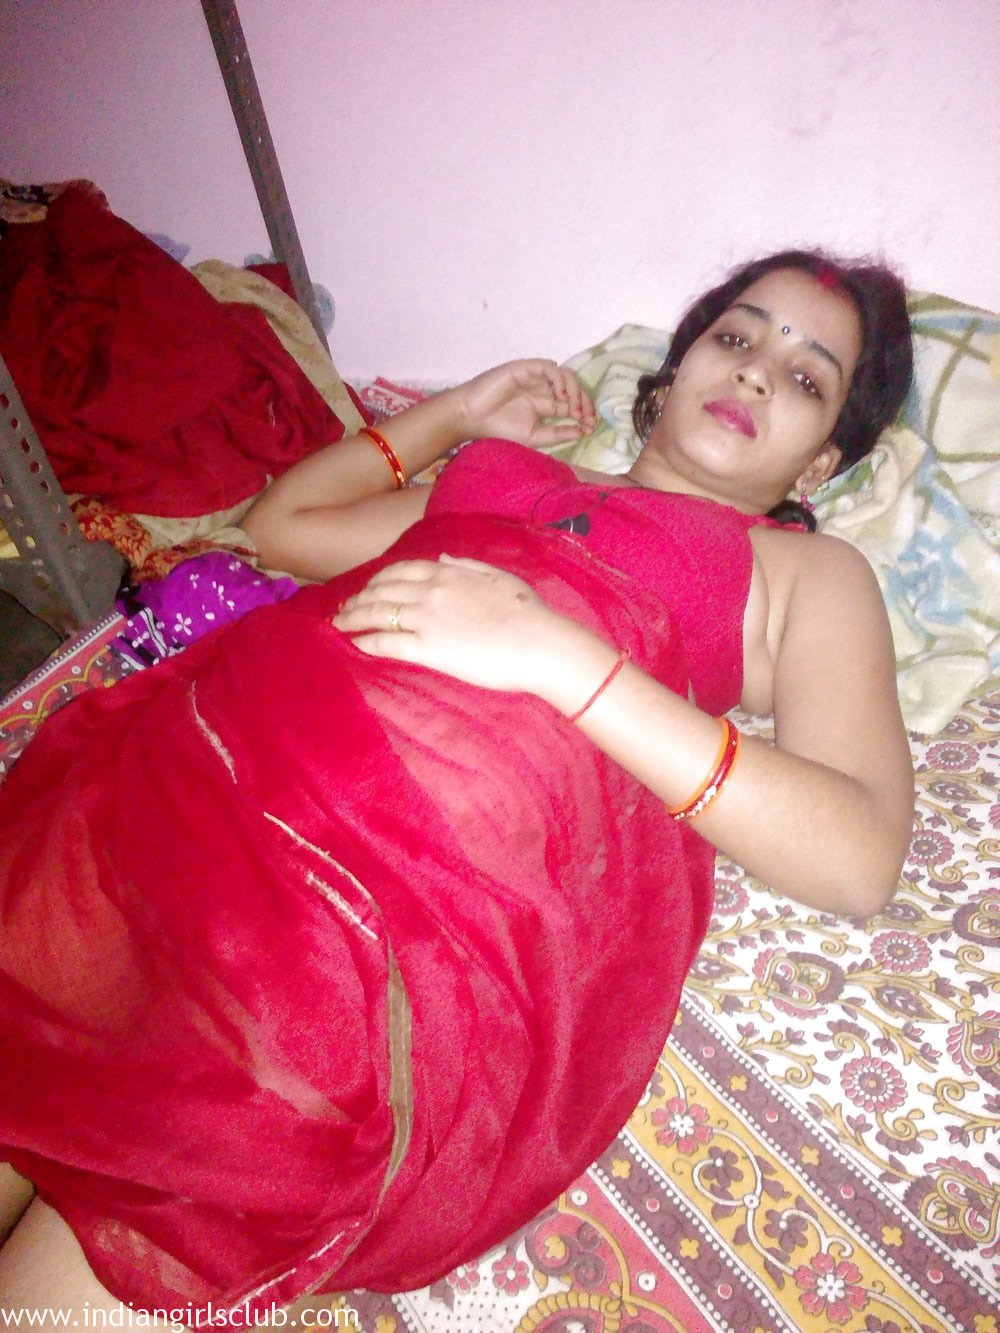 Rare Face Porn - Unseen Rare Porn Photos Of Young Indian Bhabhi Naked ...